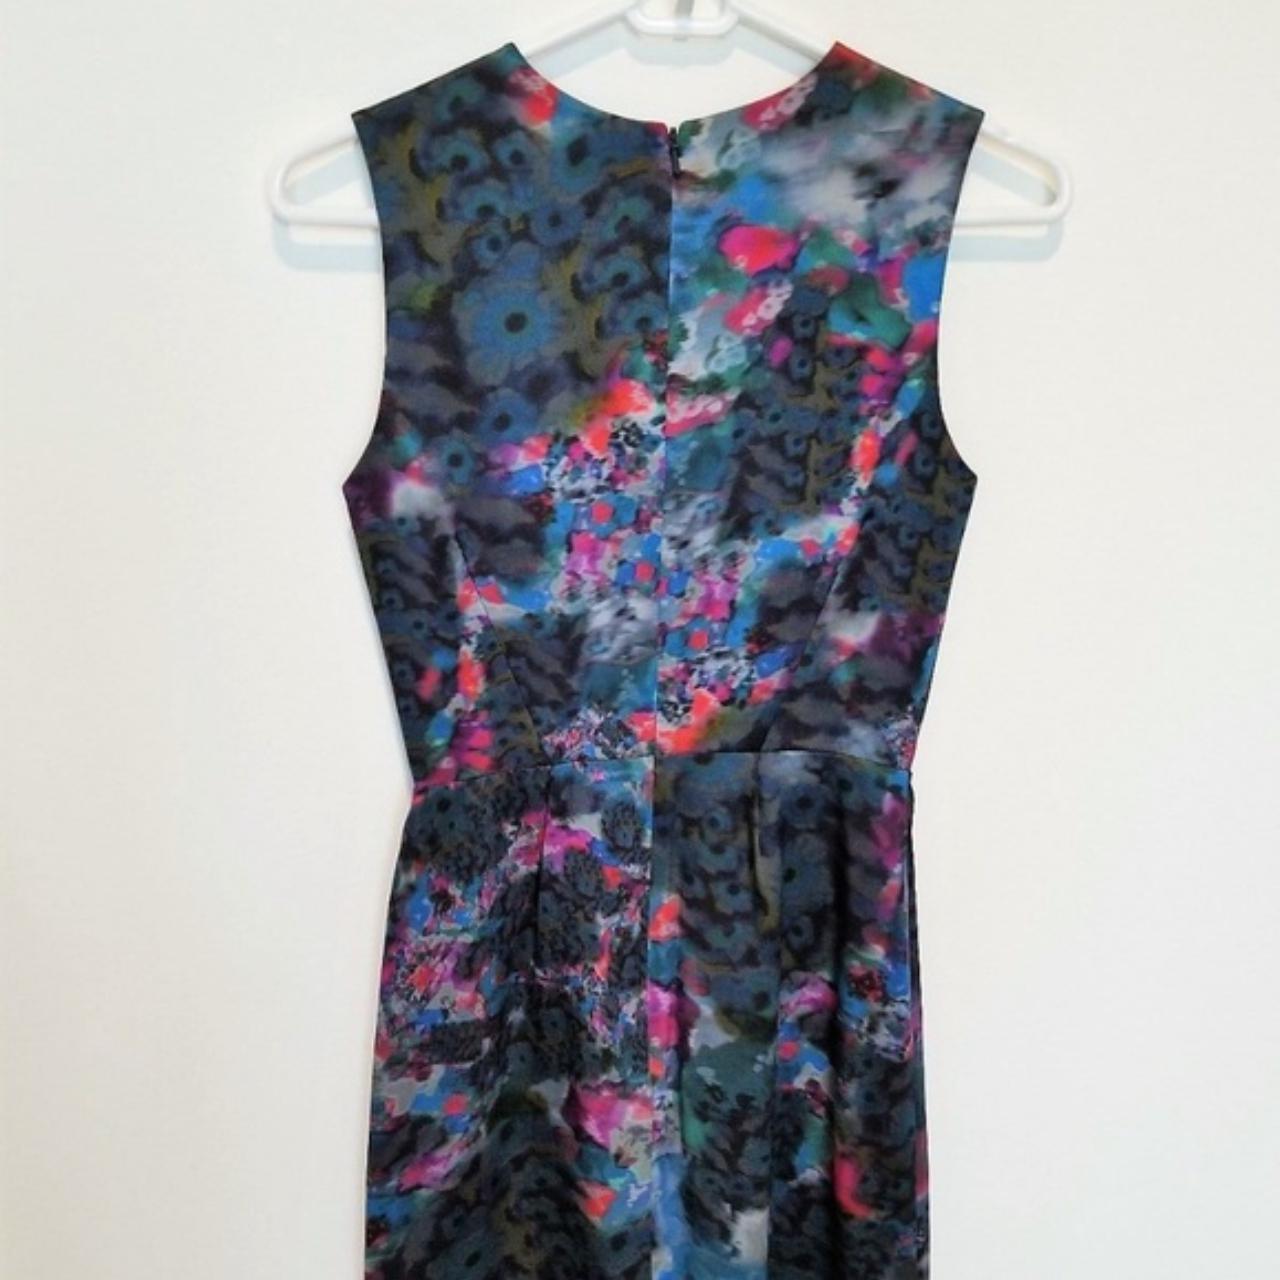 Product Image 3 - erdem floral silk sleeveless dress

beautiful